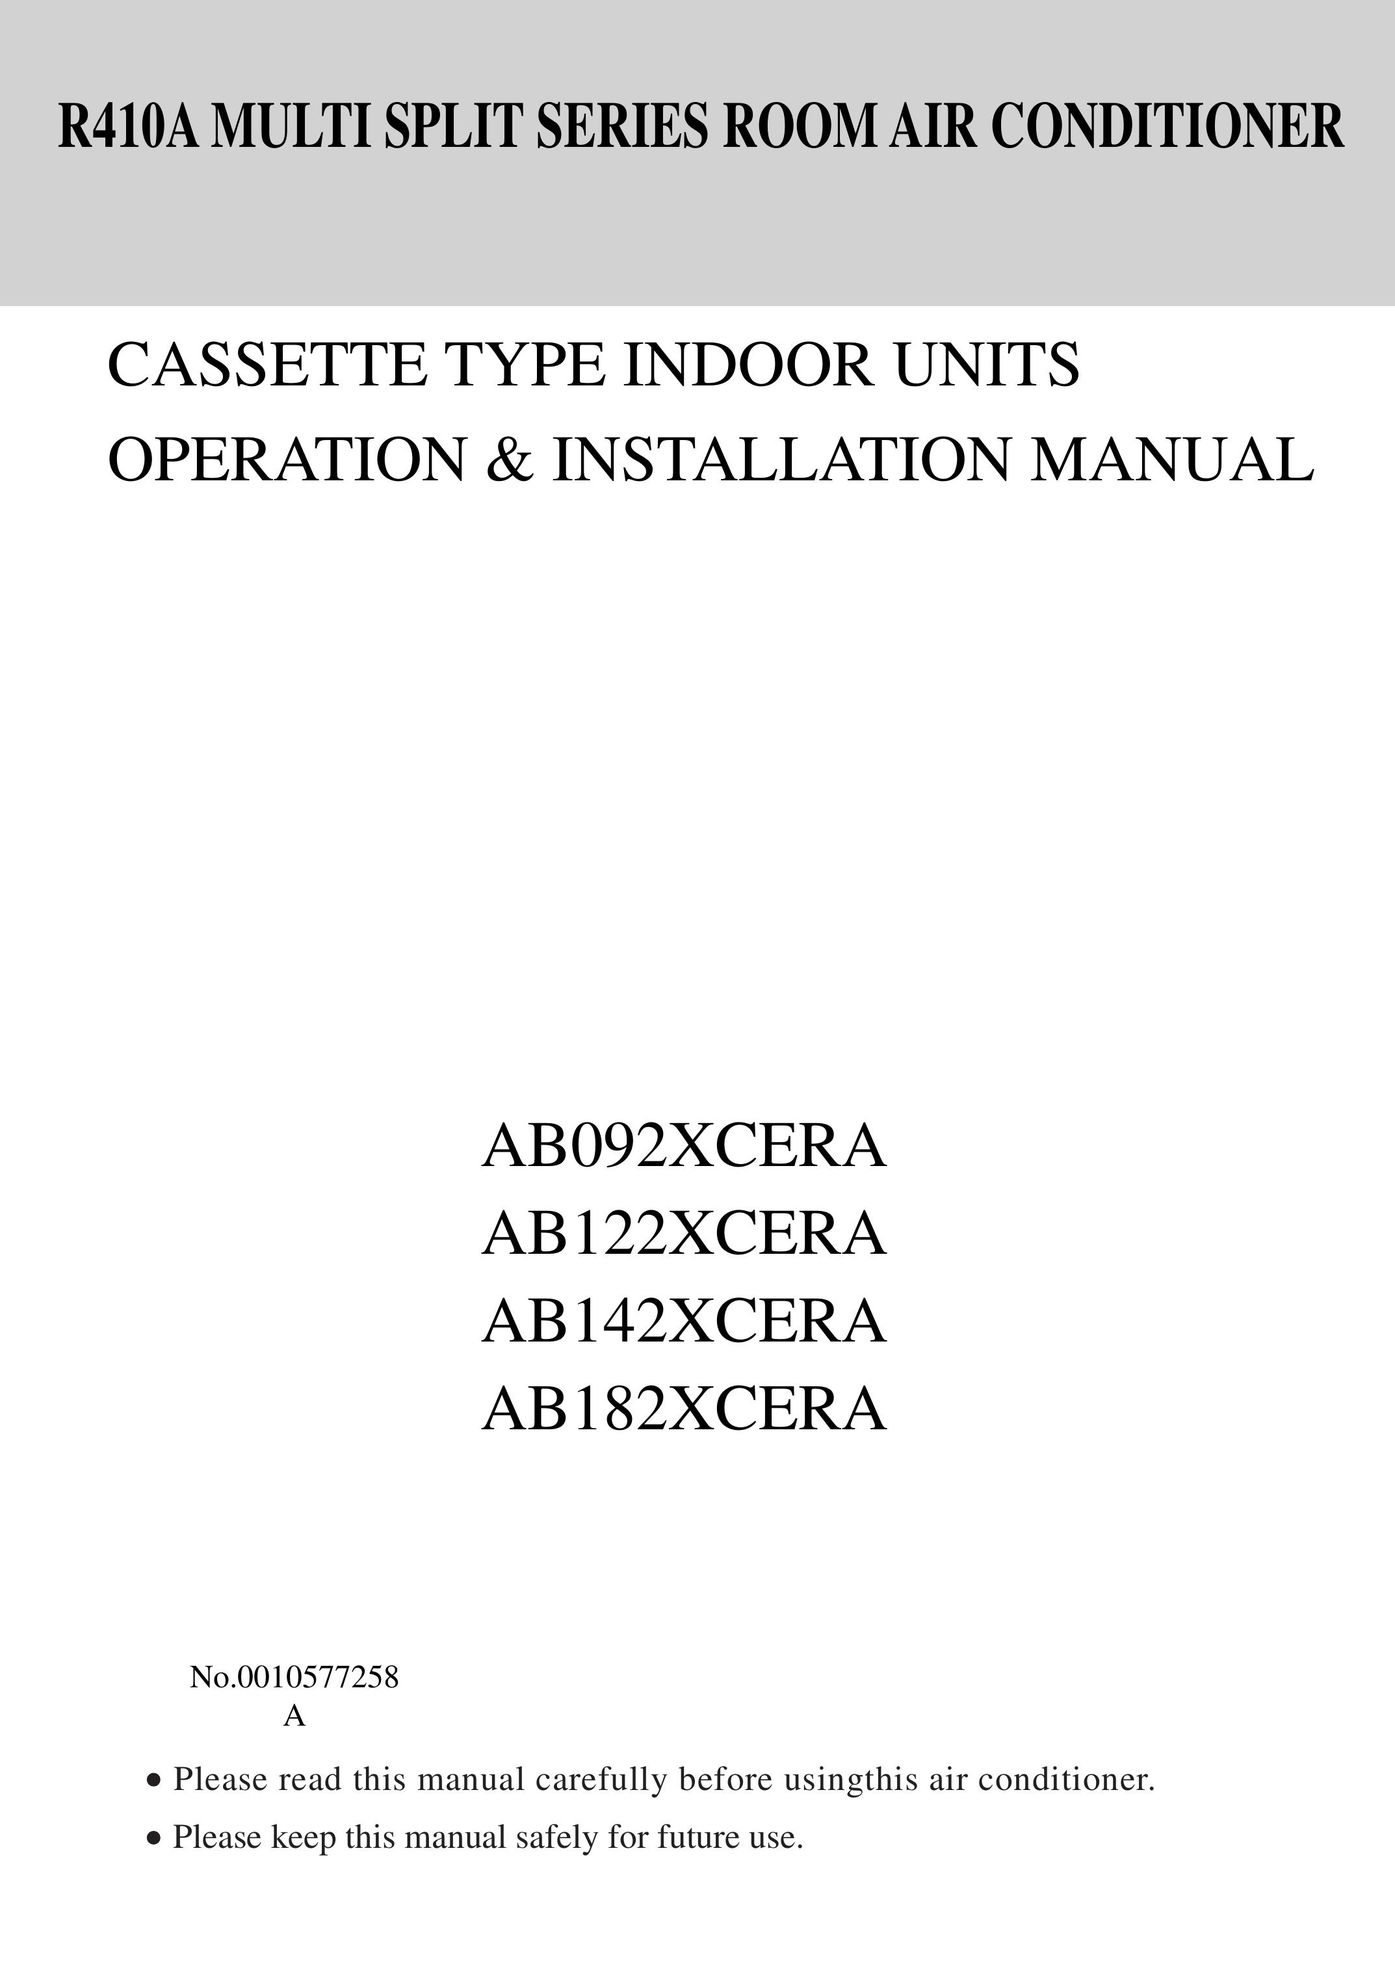 Haier AB142XCERA Air Conditioner User Manual